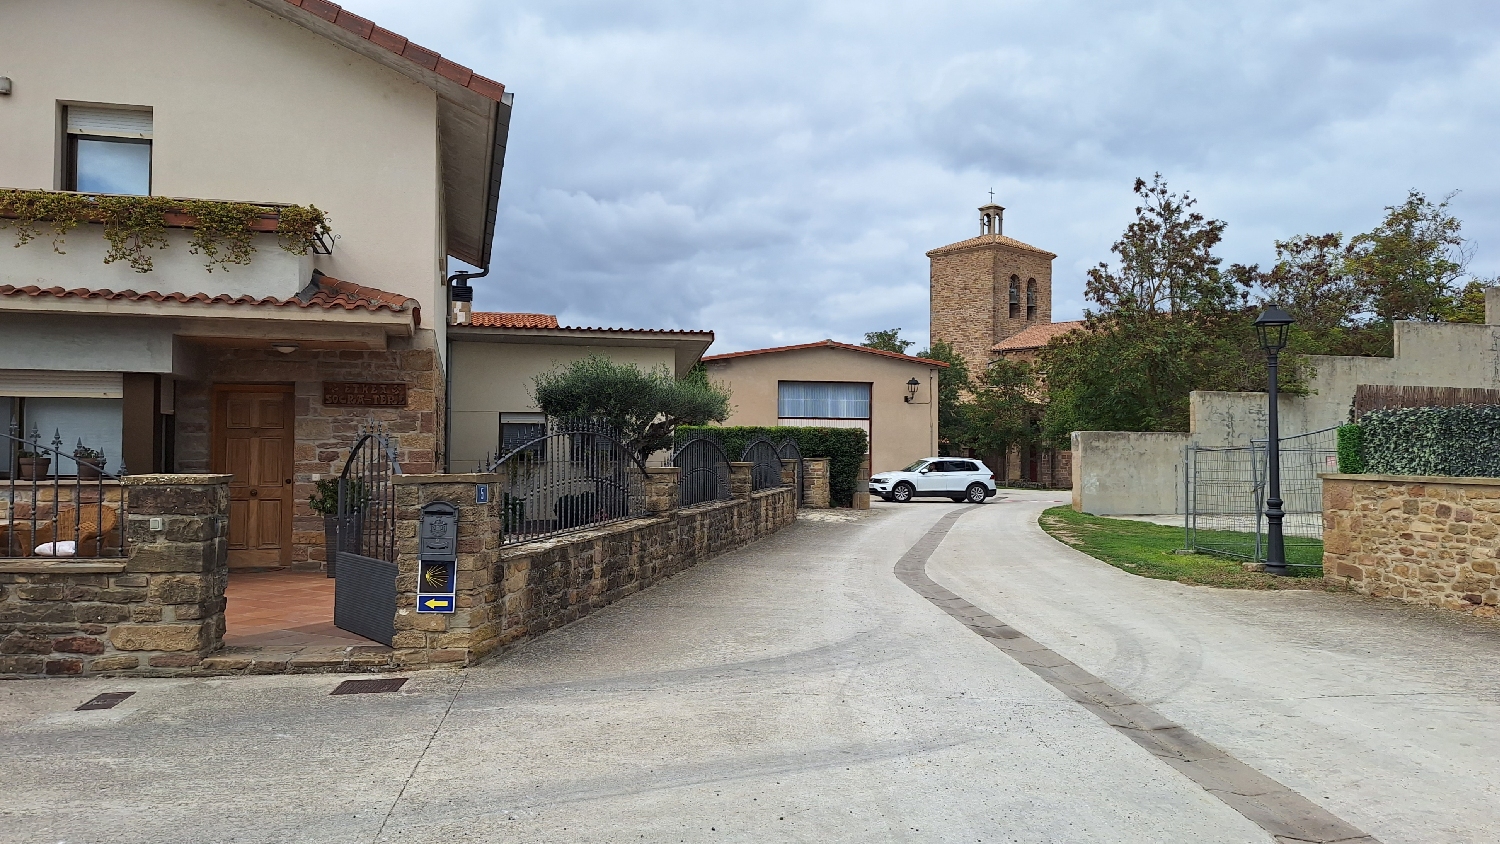 El Camino, Aragon út, az utolsó falu Monreal előtt